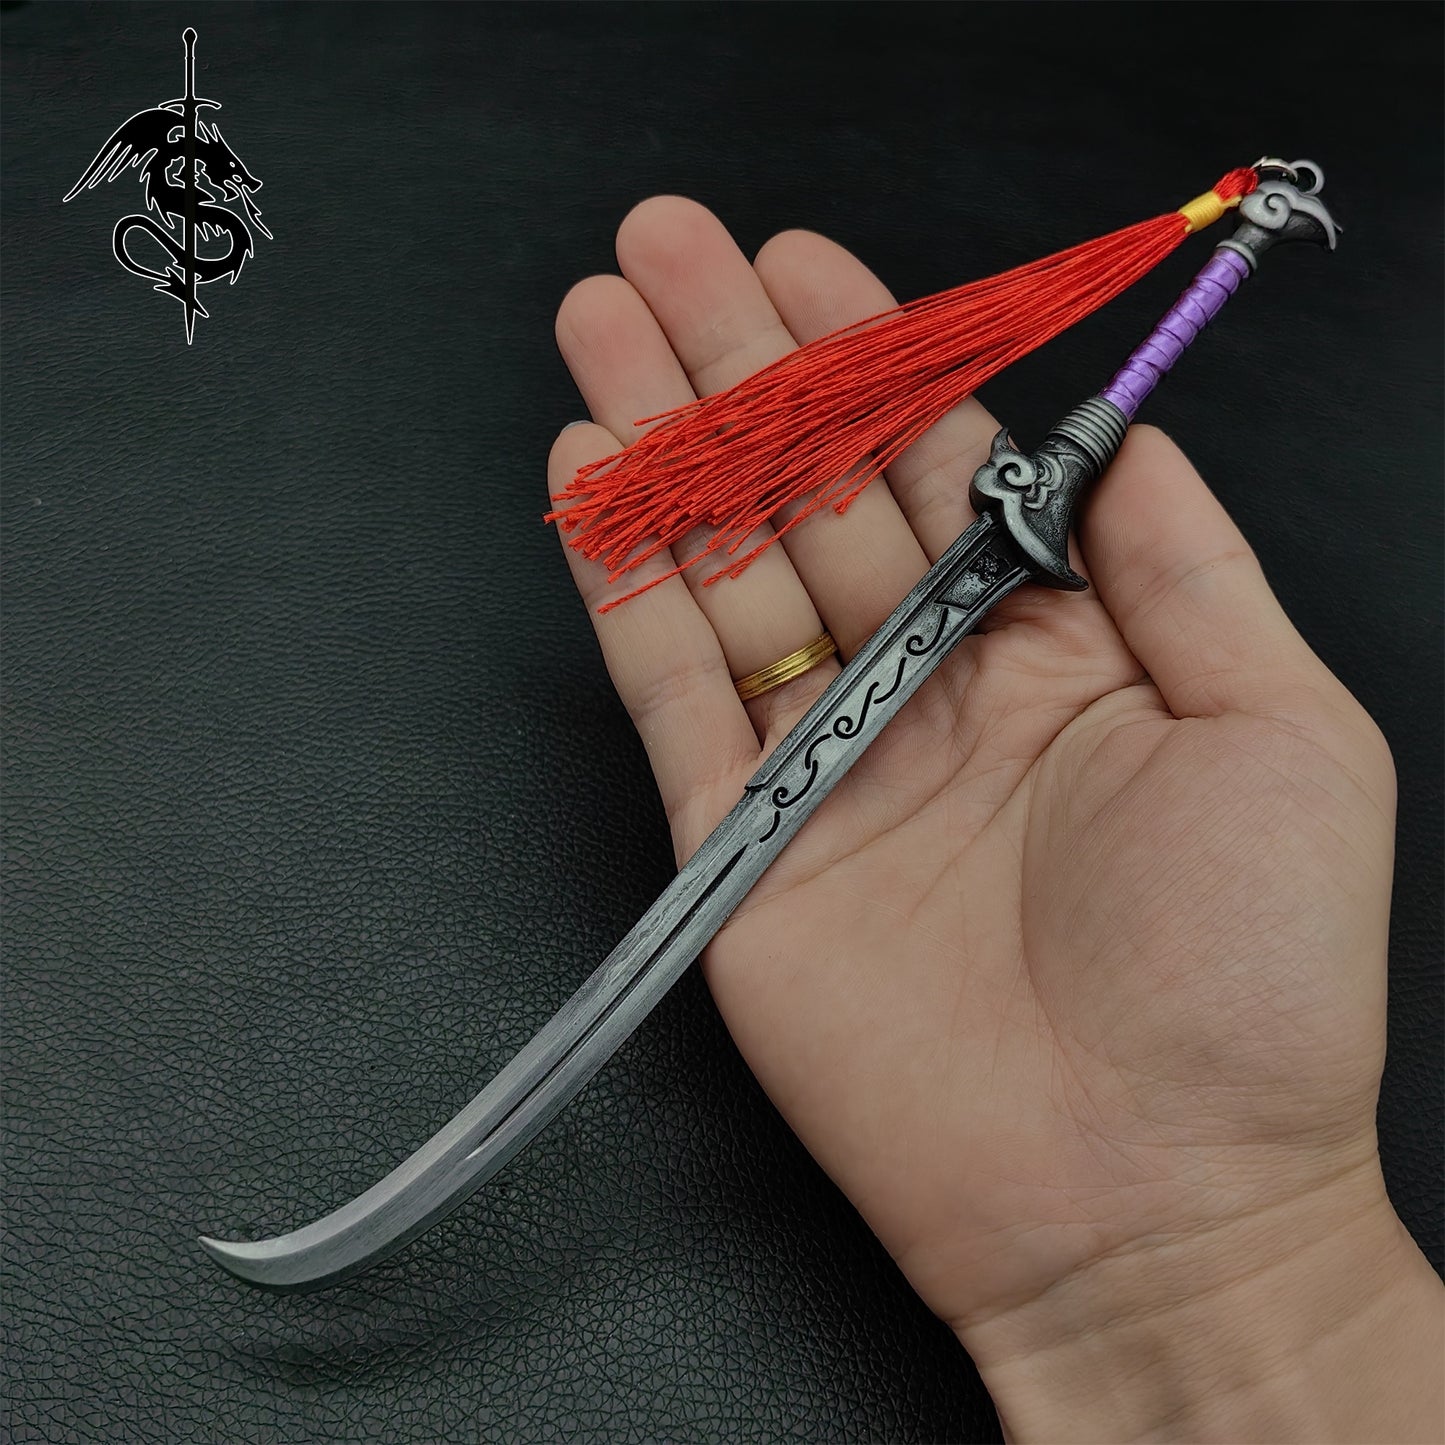 The Demon Hunter Ailmation Luocha Two-handed Sword Metal Replica